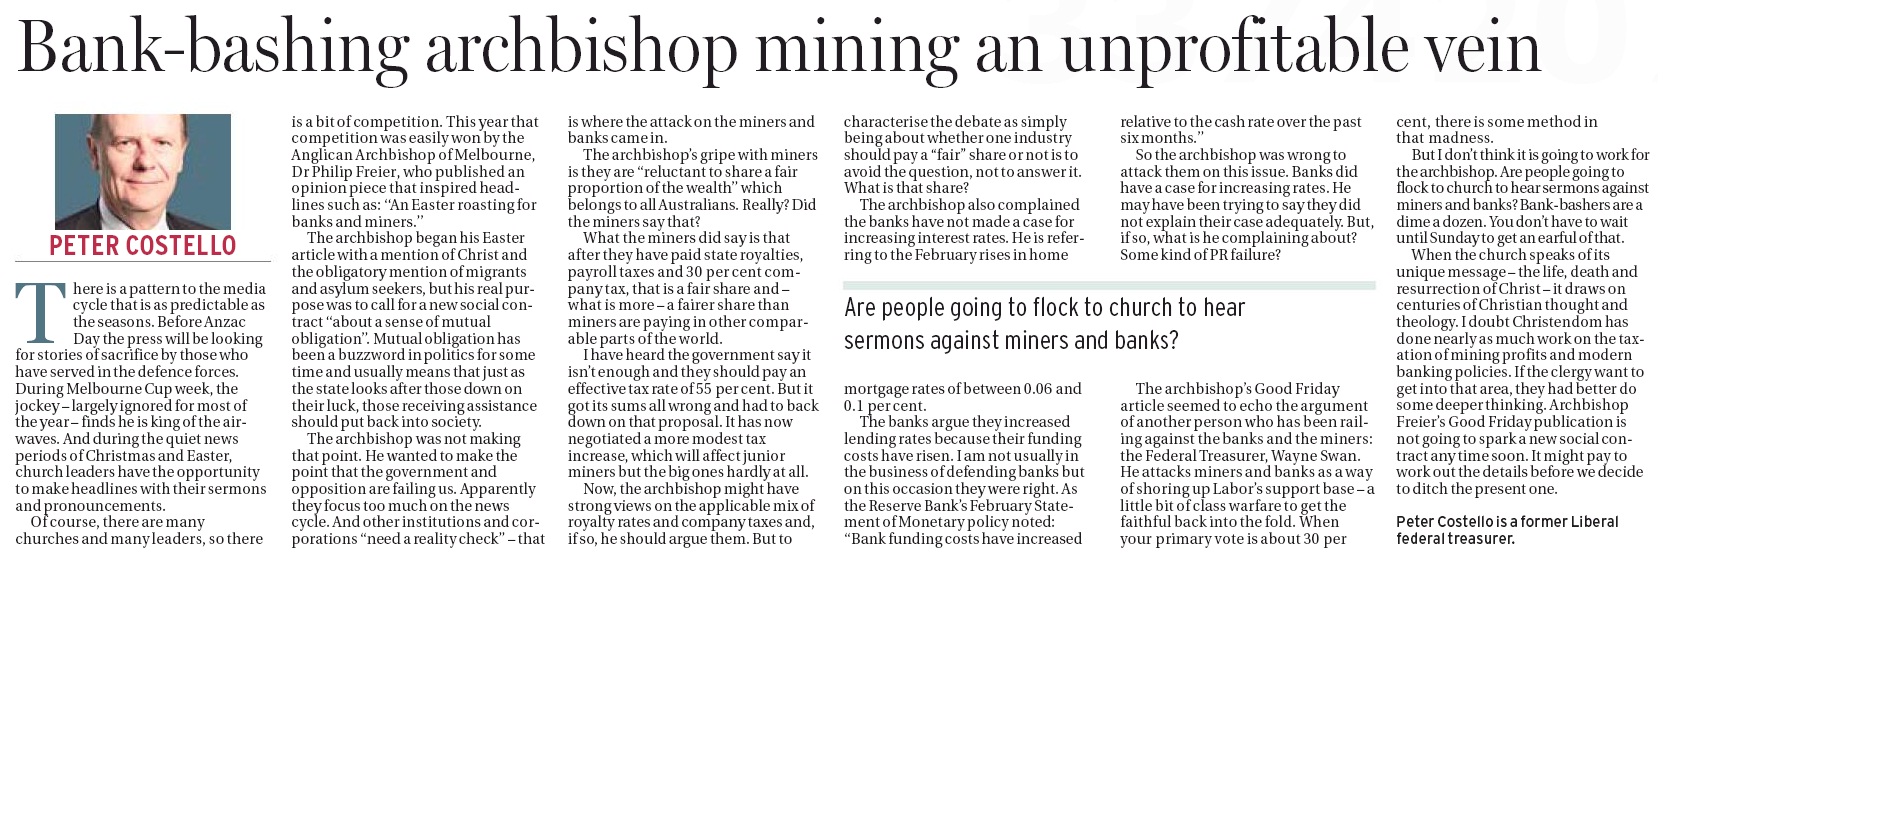 smh_-_bank-bashing_archbishop_mining_an_unprofitable_vein_-_11_april_2012jpg